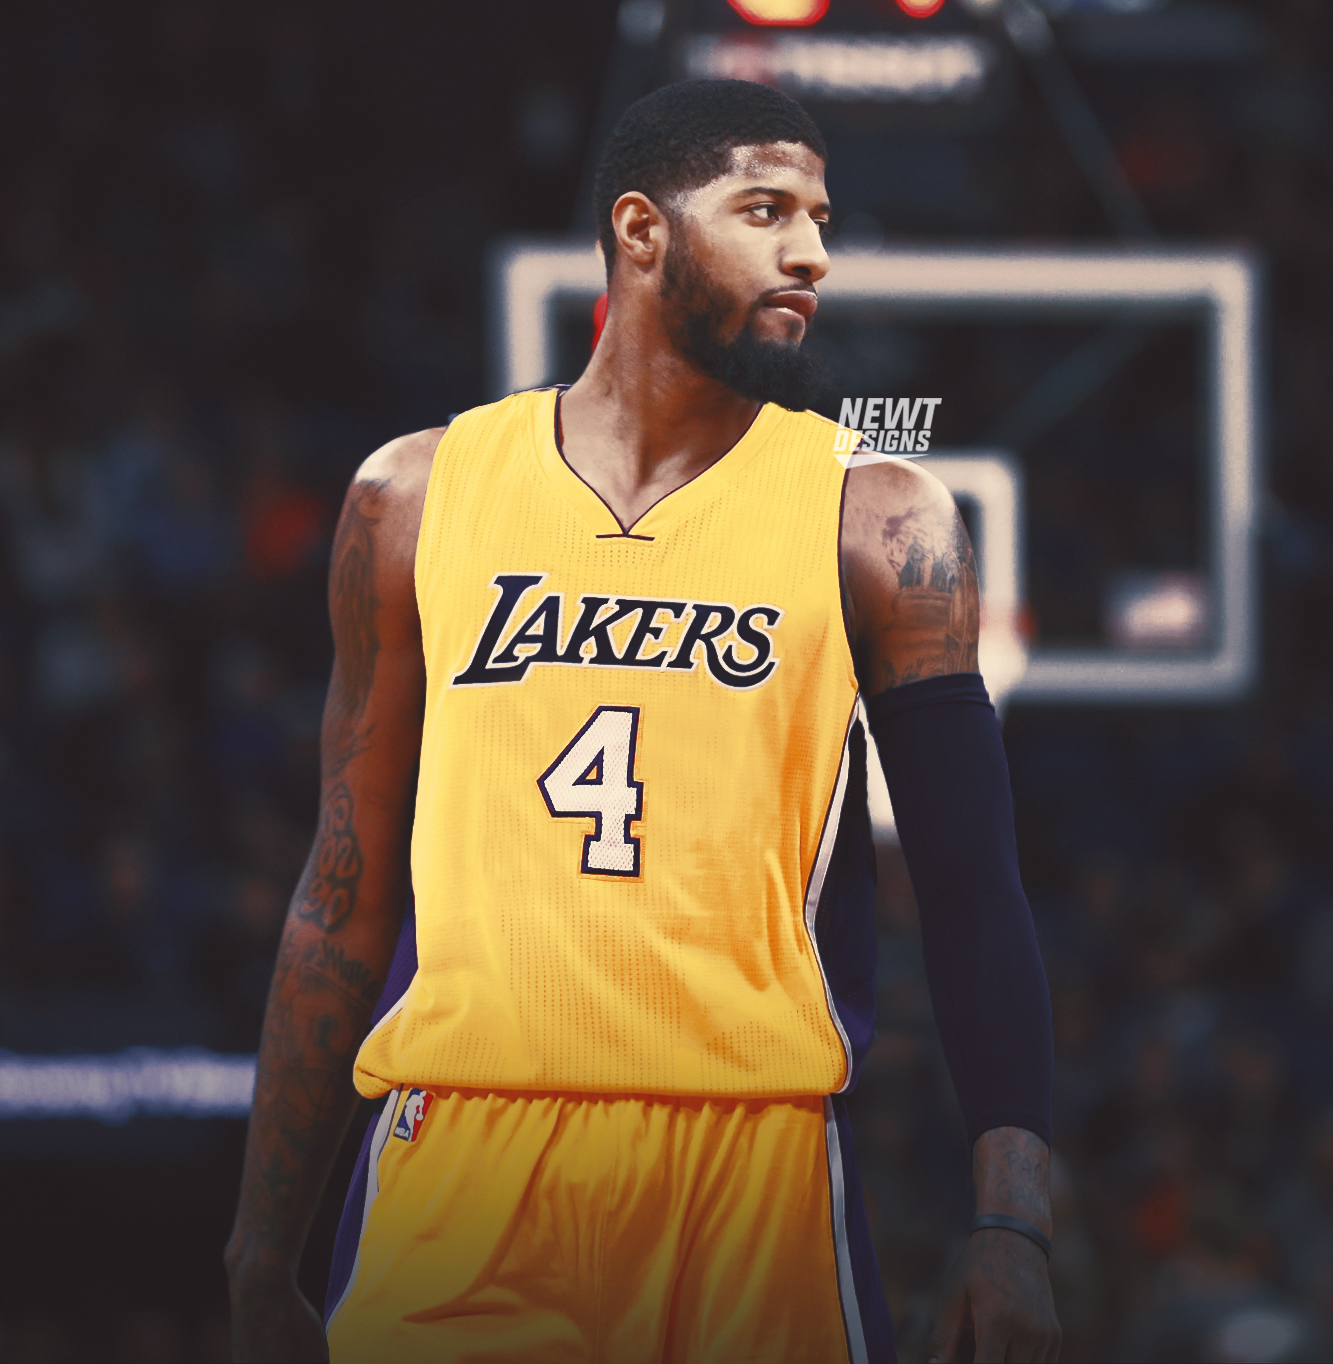 Paul George Jersey Swap - Los Angeles Lakers by NewtDesigns on DeviantArt